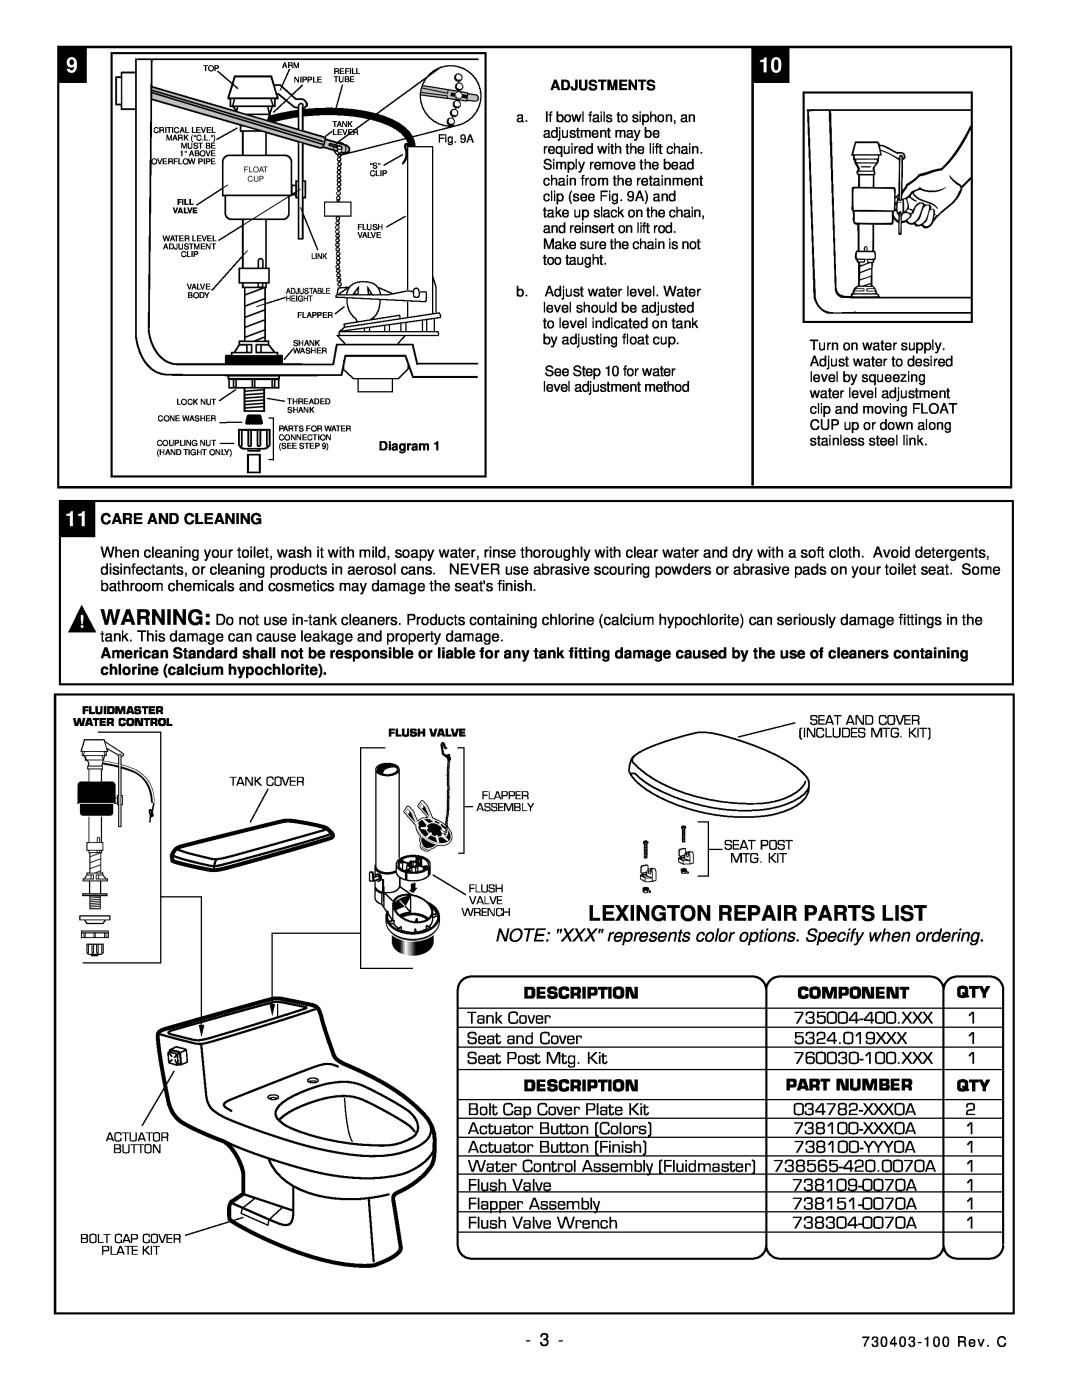 American Standard 2037.100 installation instructions Lexington Repair Parts List, Description, Component, Part Number 